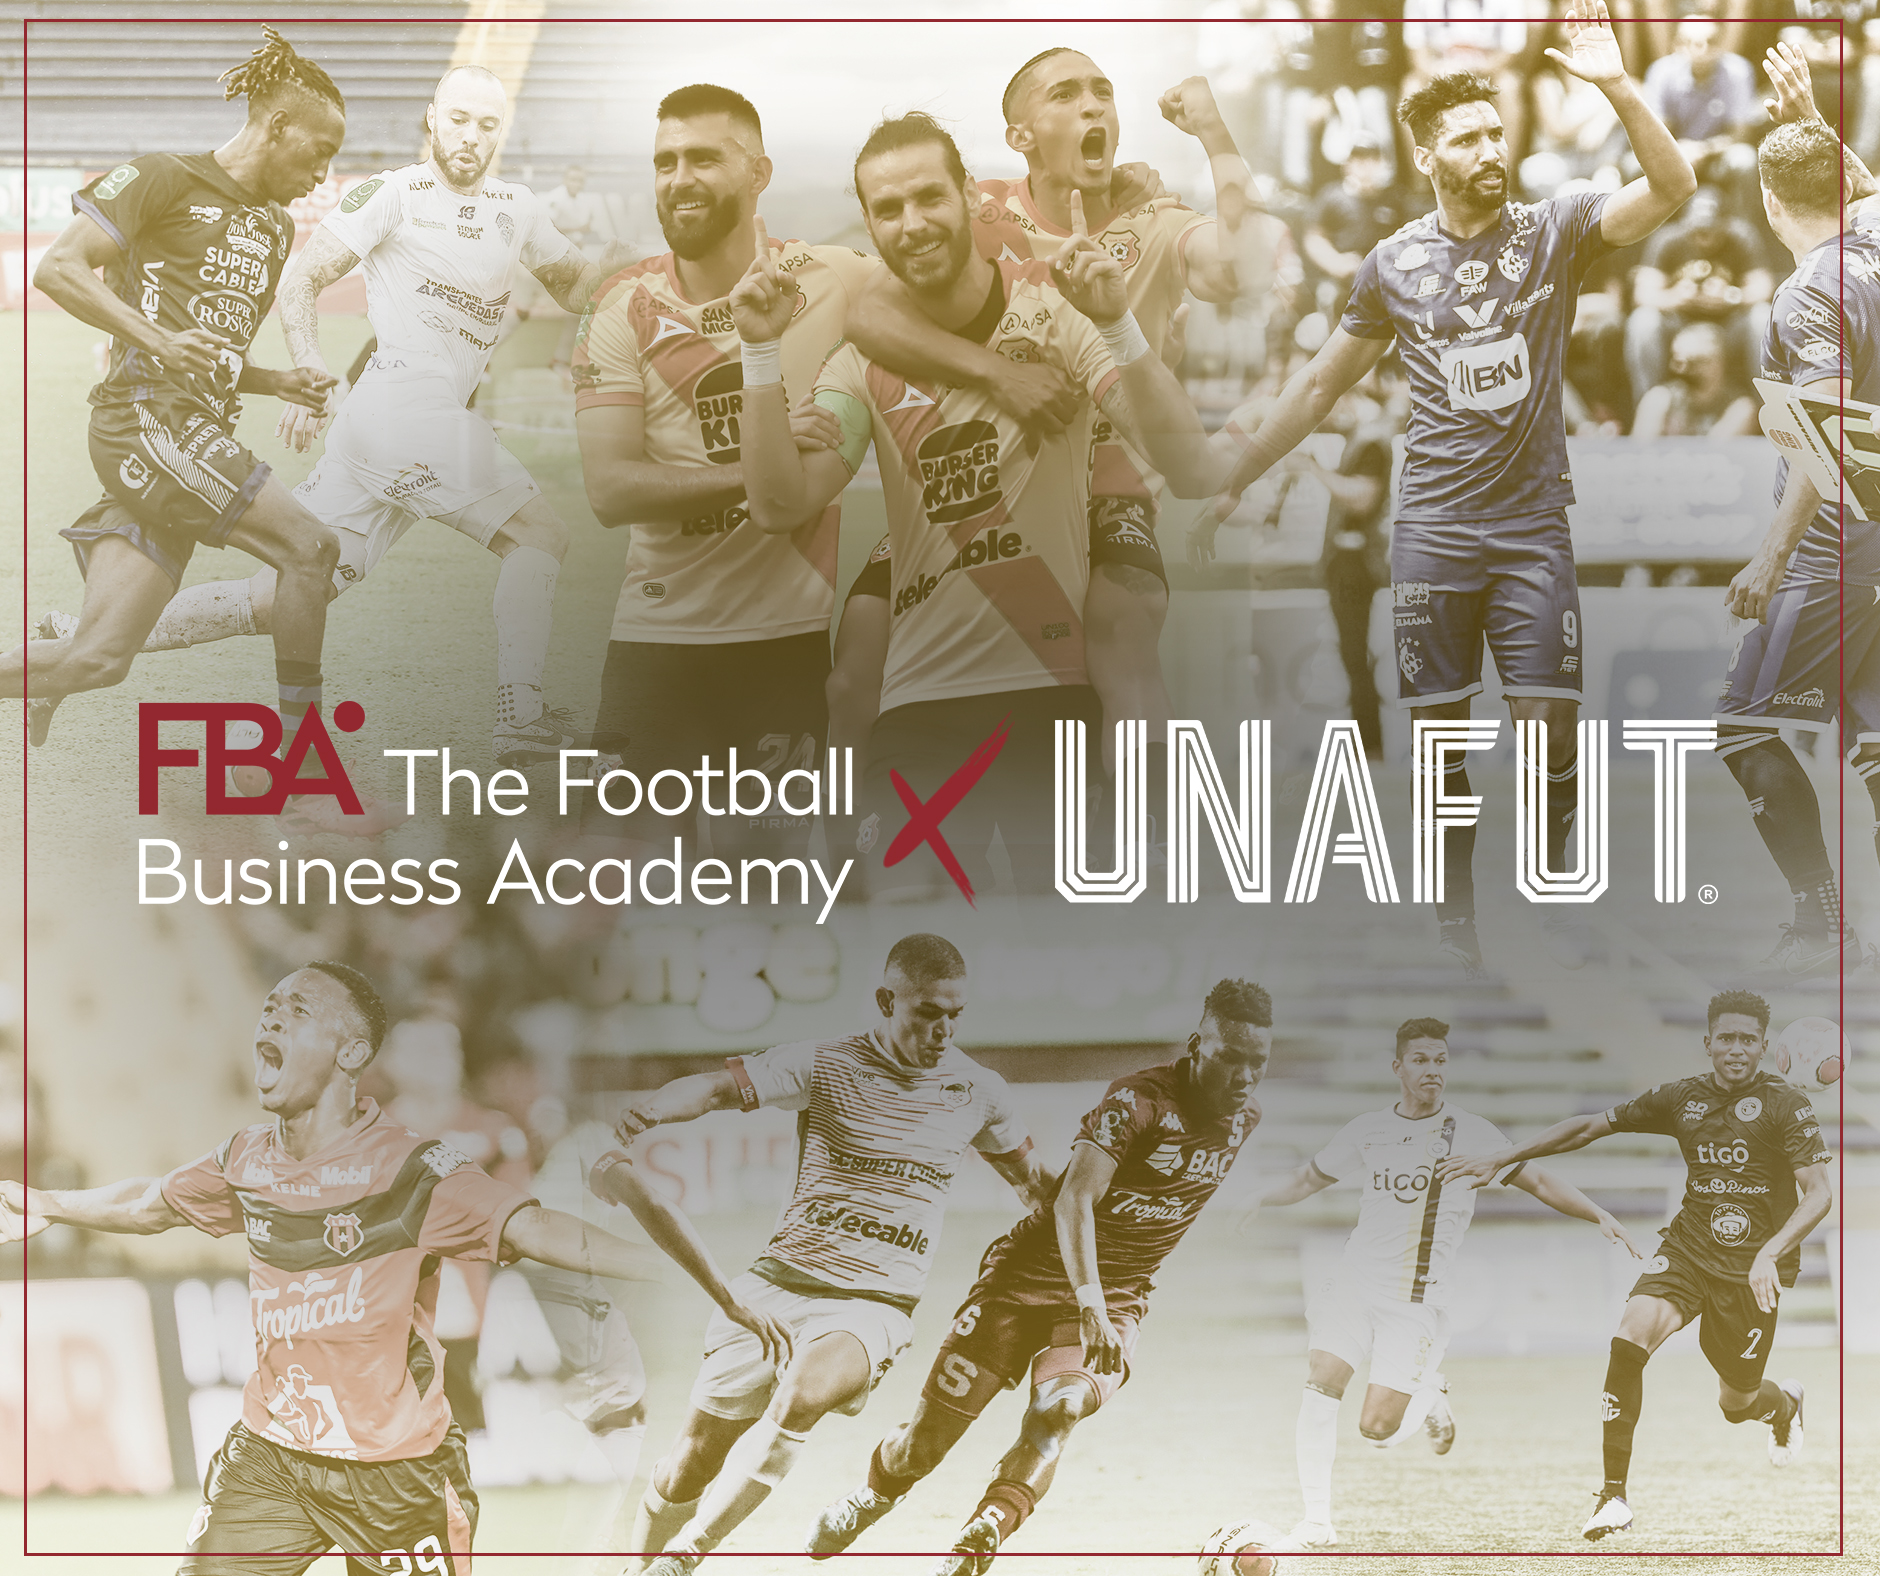 The FBA - UNAFUT